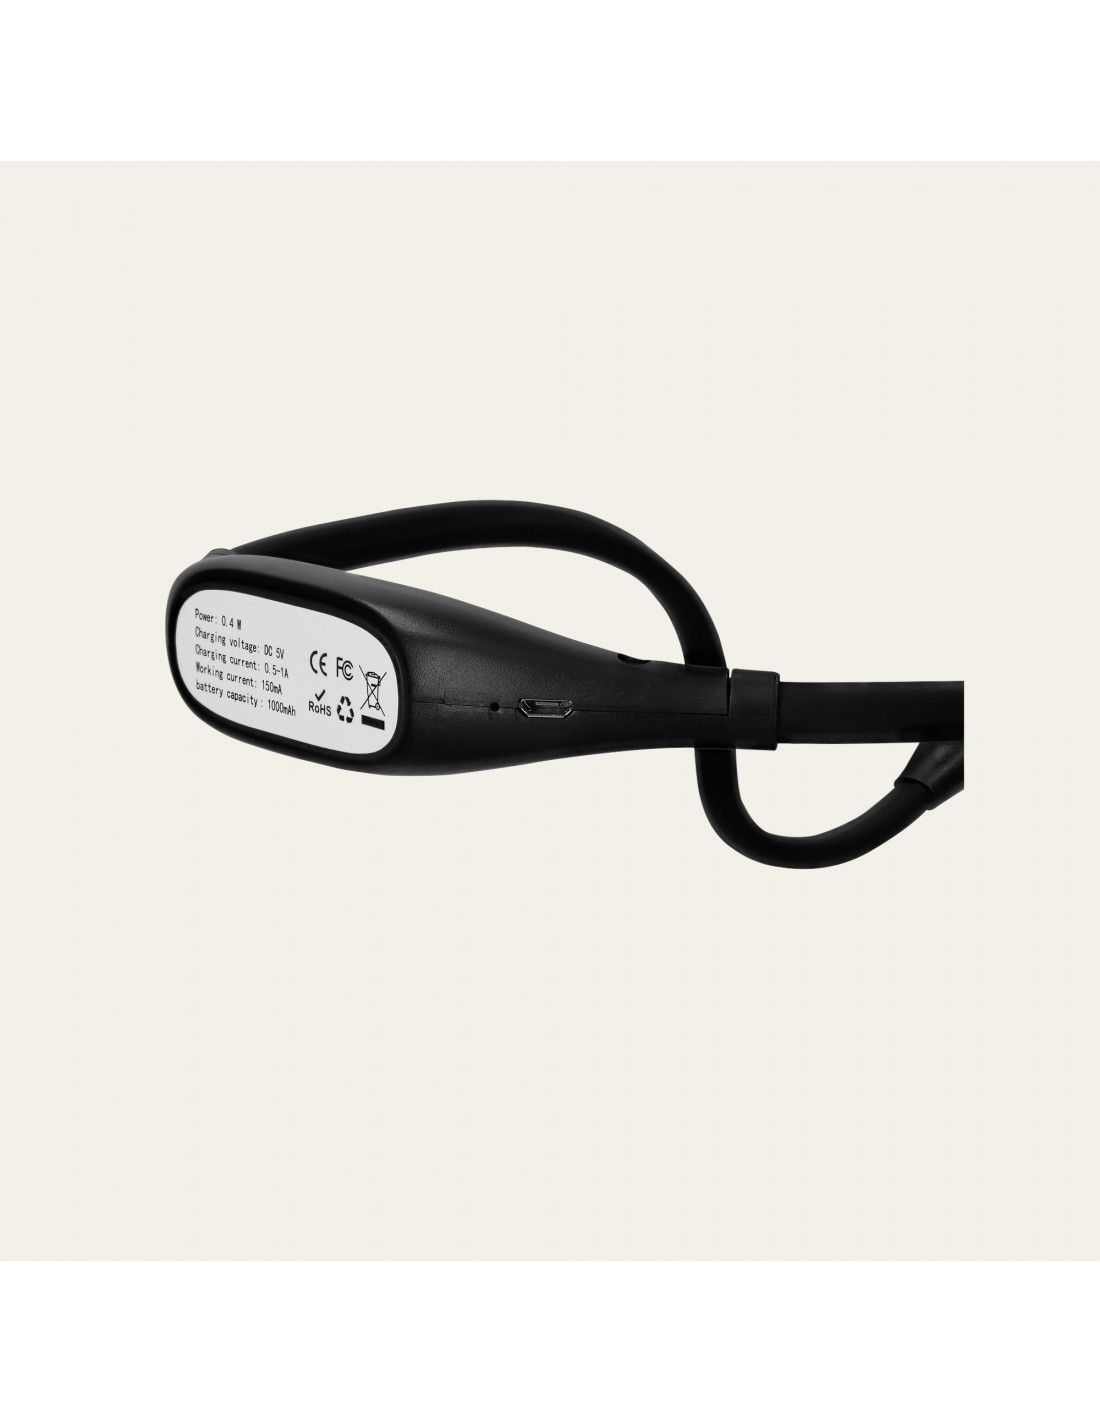 lampara led de lectura ksix para cuello 3 modos de luz ergonomica hasta 20h de autonomia  1